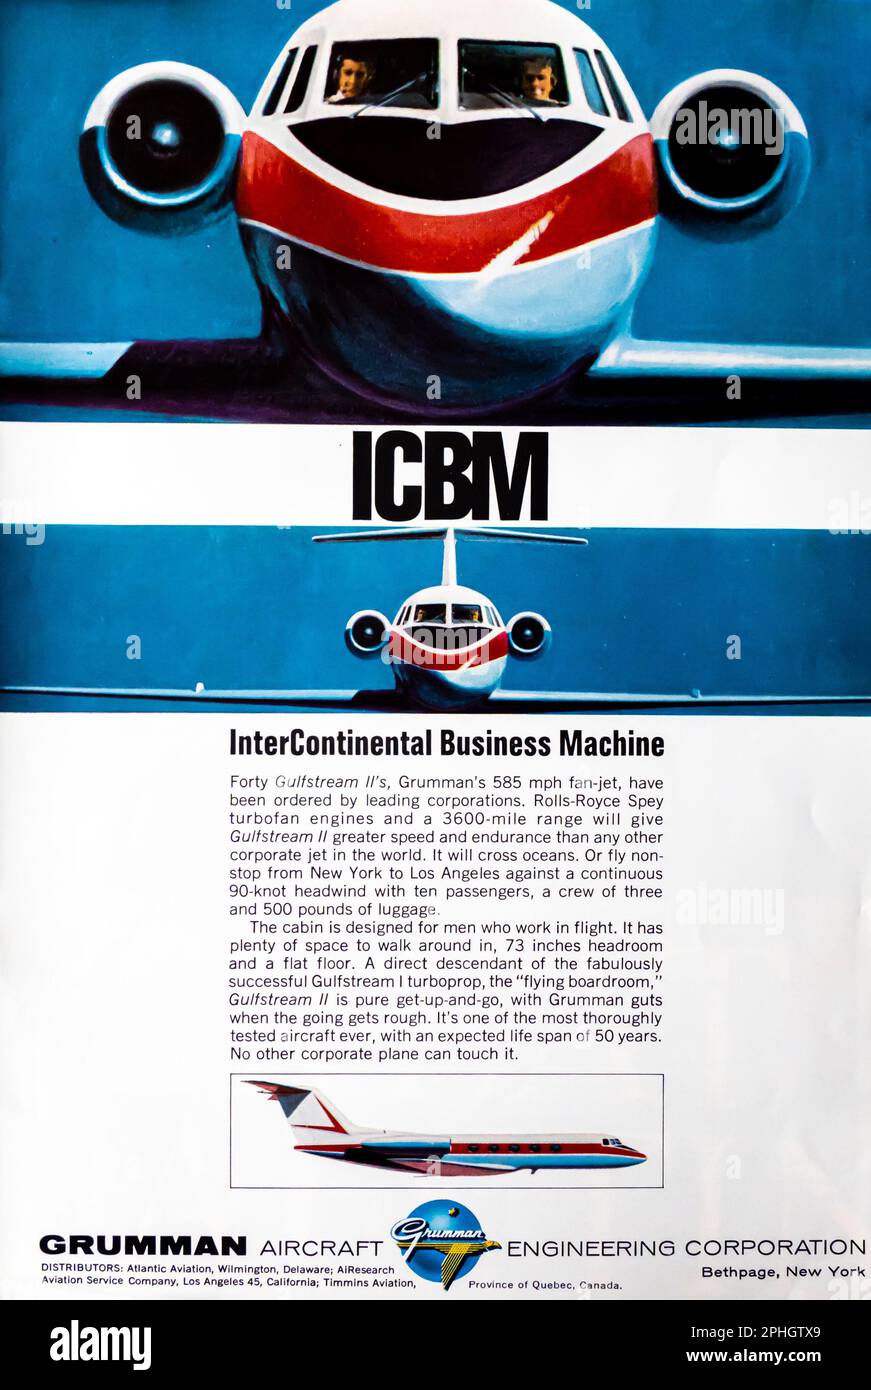 Grumman Aircraft Corporation ICBM - Intercontinental Business Machine - Gulfstream II advert in a Natgeo magazine September 1966 Stock Photo